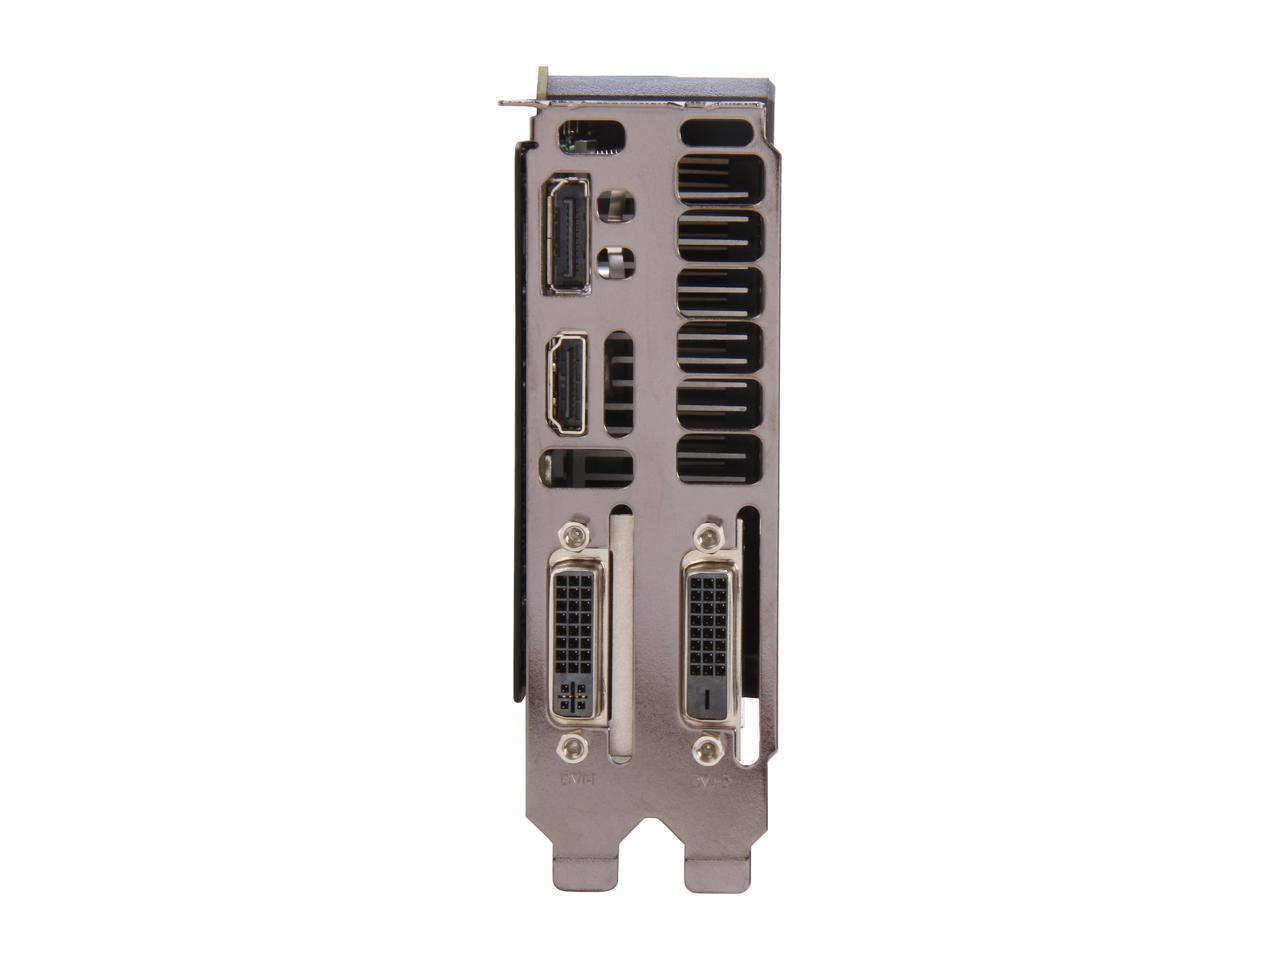 EVGA SuperClocked+ 03G-P4-3663-KR GeForce GTX 660 Ti 3GB 192-bit GDDR5 PCI Express 3.0 x16 HDCP Ready SLI Support Video Card